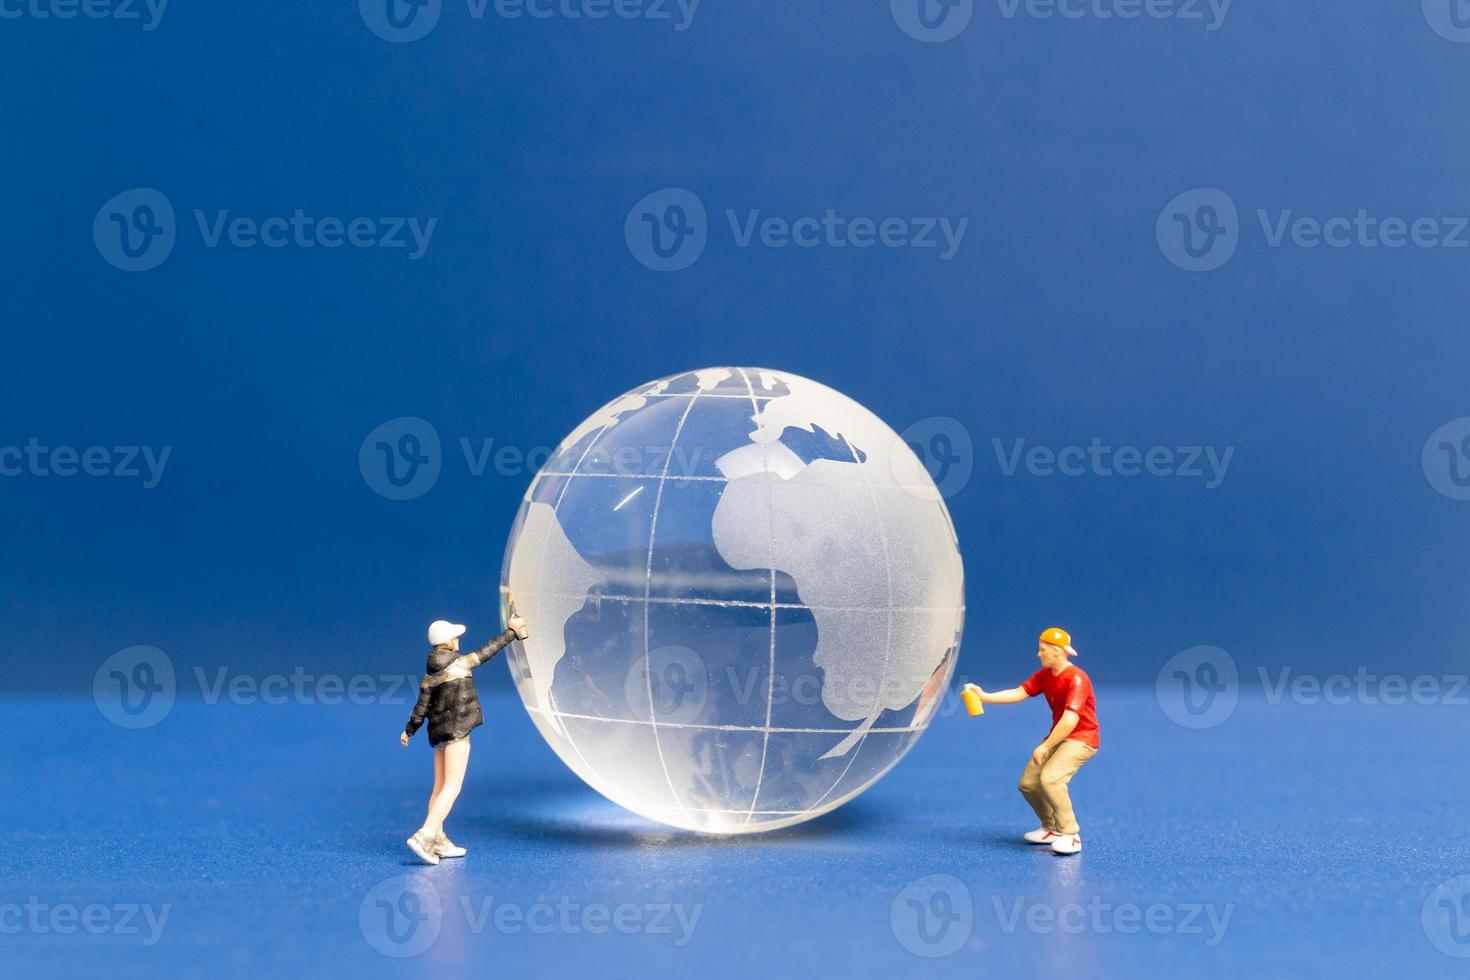 miniatyr människor tonåring spruta färg crytal globe på blå bakgrund foto